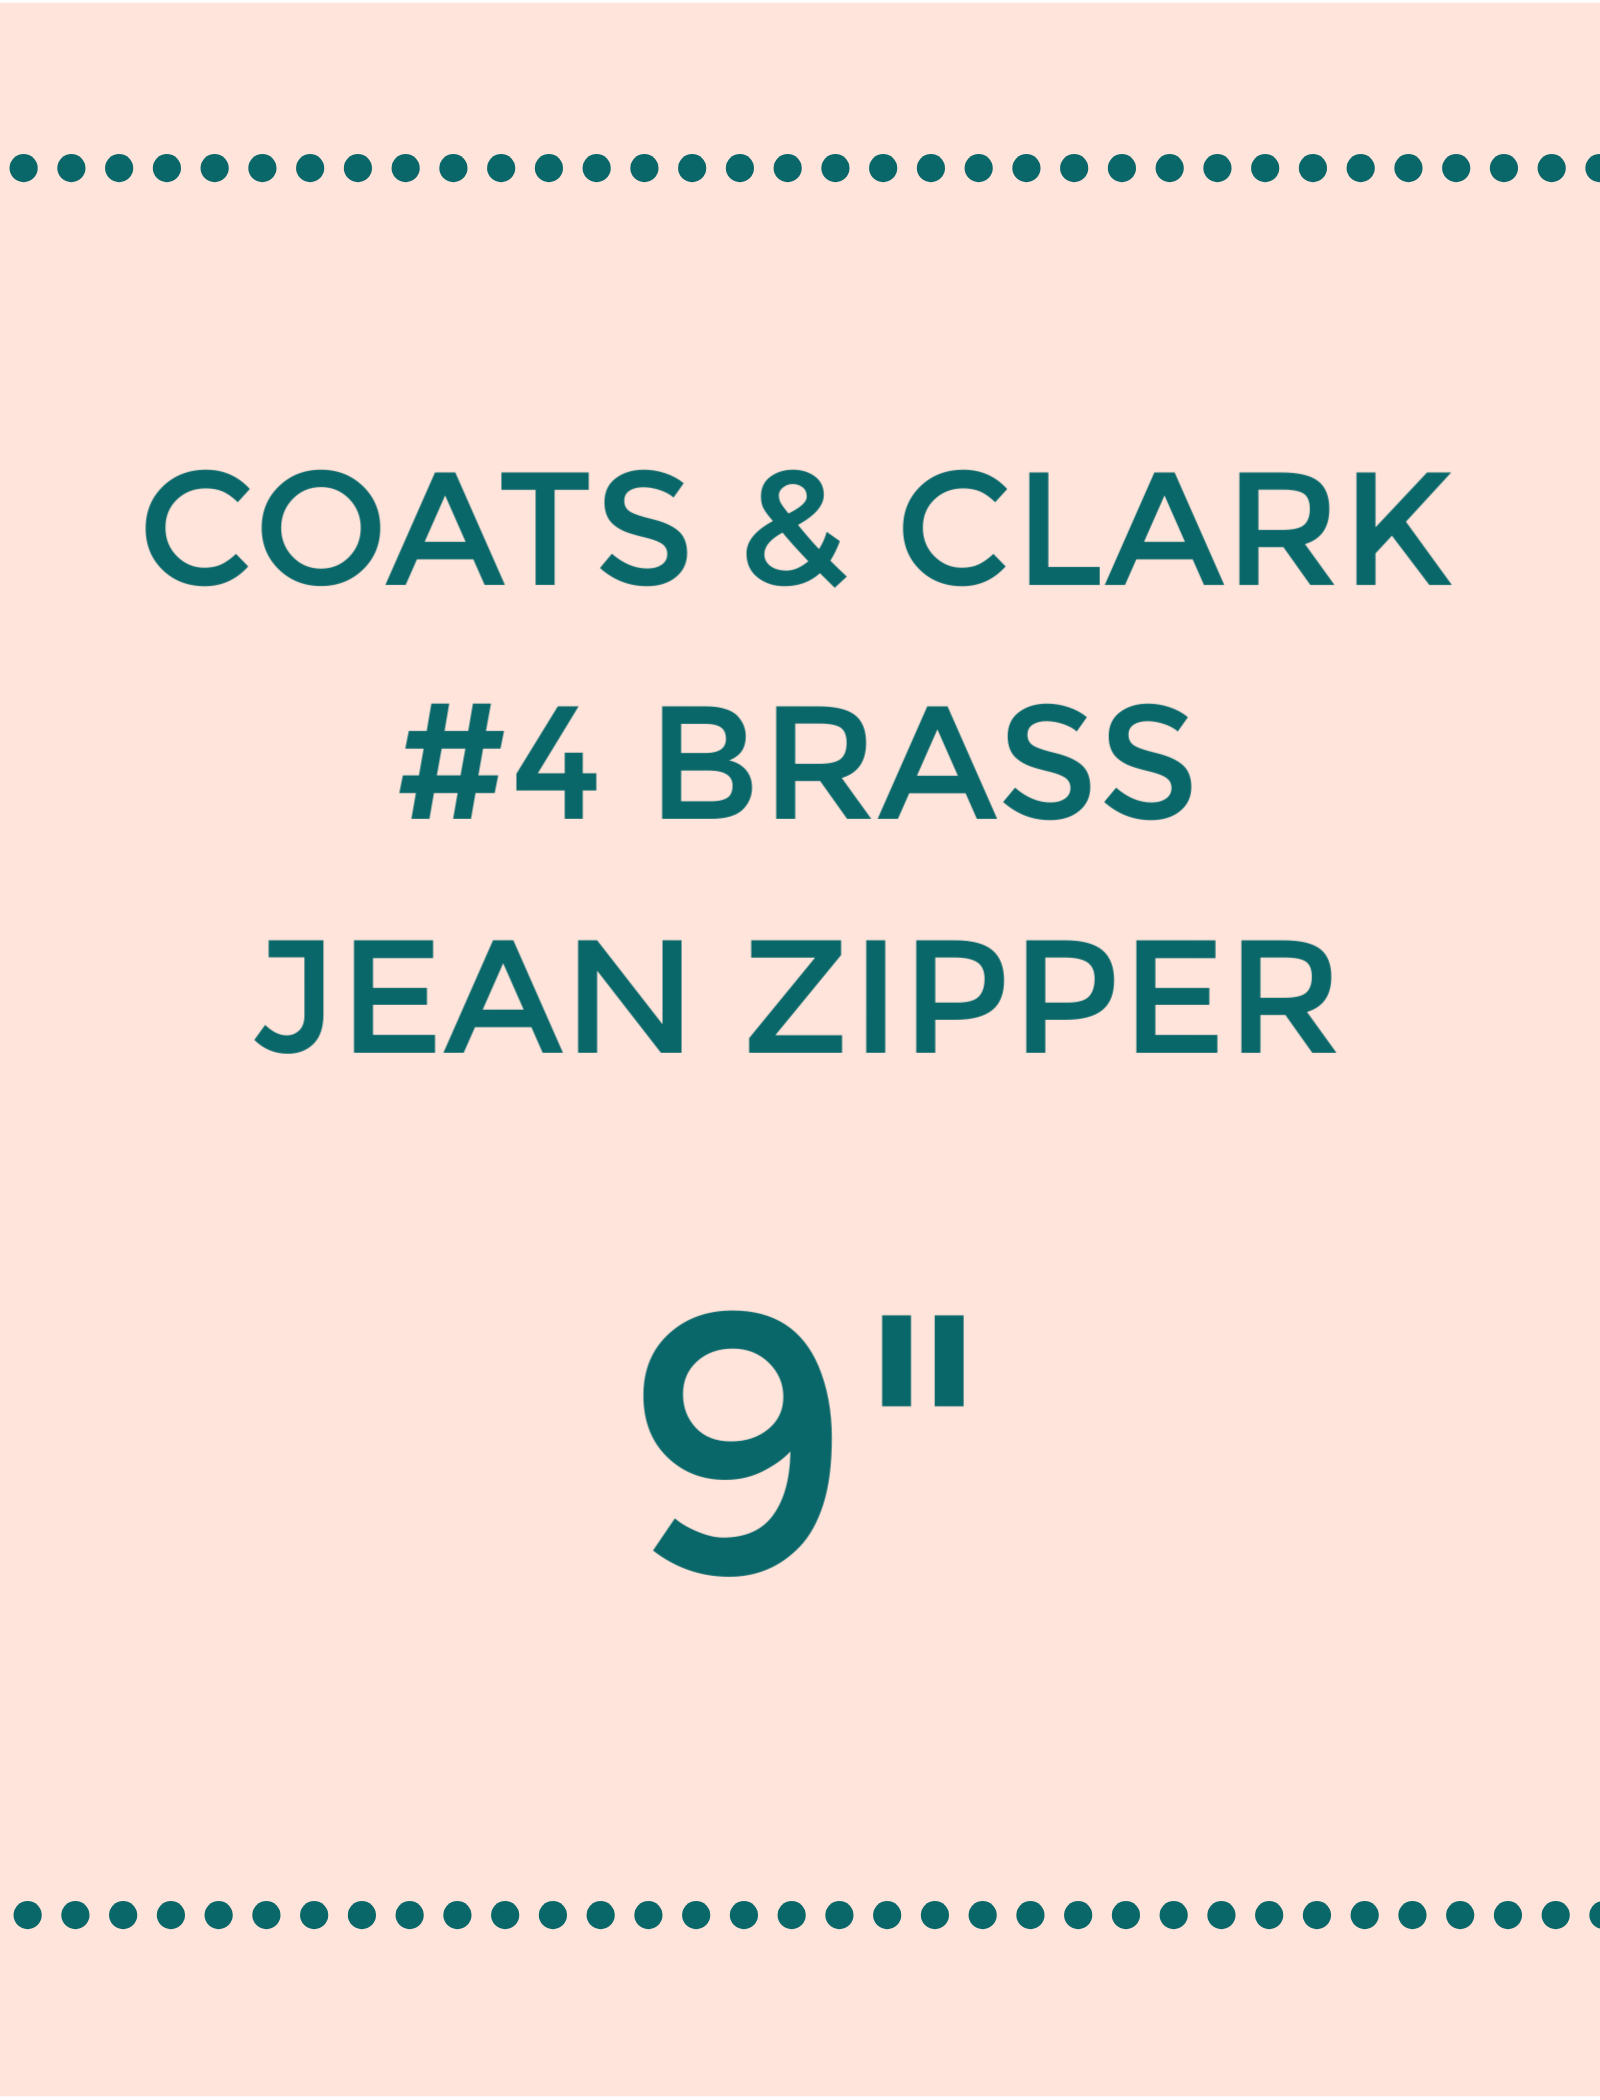 Coats & Clark #4 Brass Jean Zipper - 9 - Stonemountain & Daughter